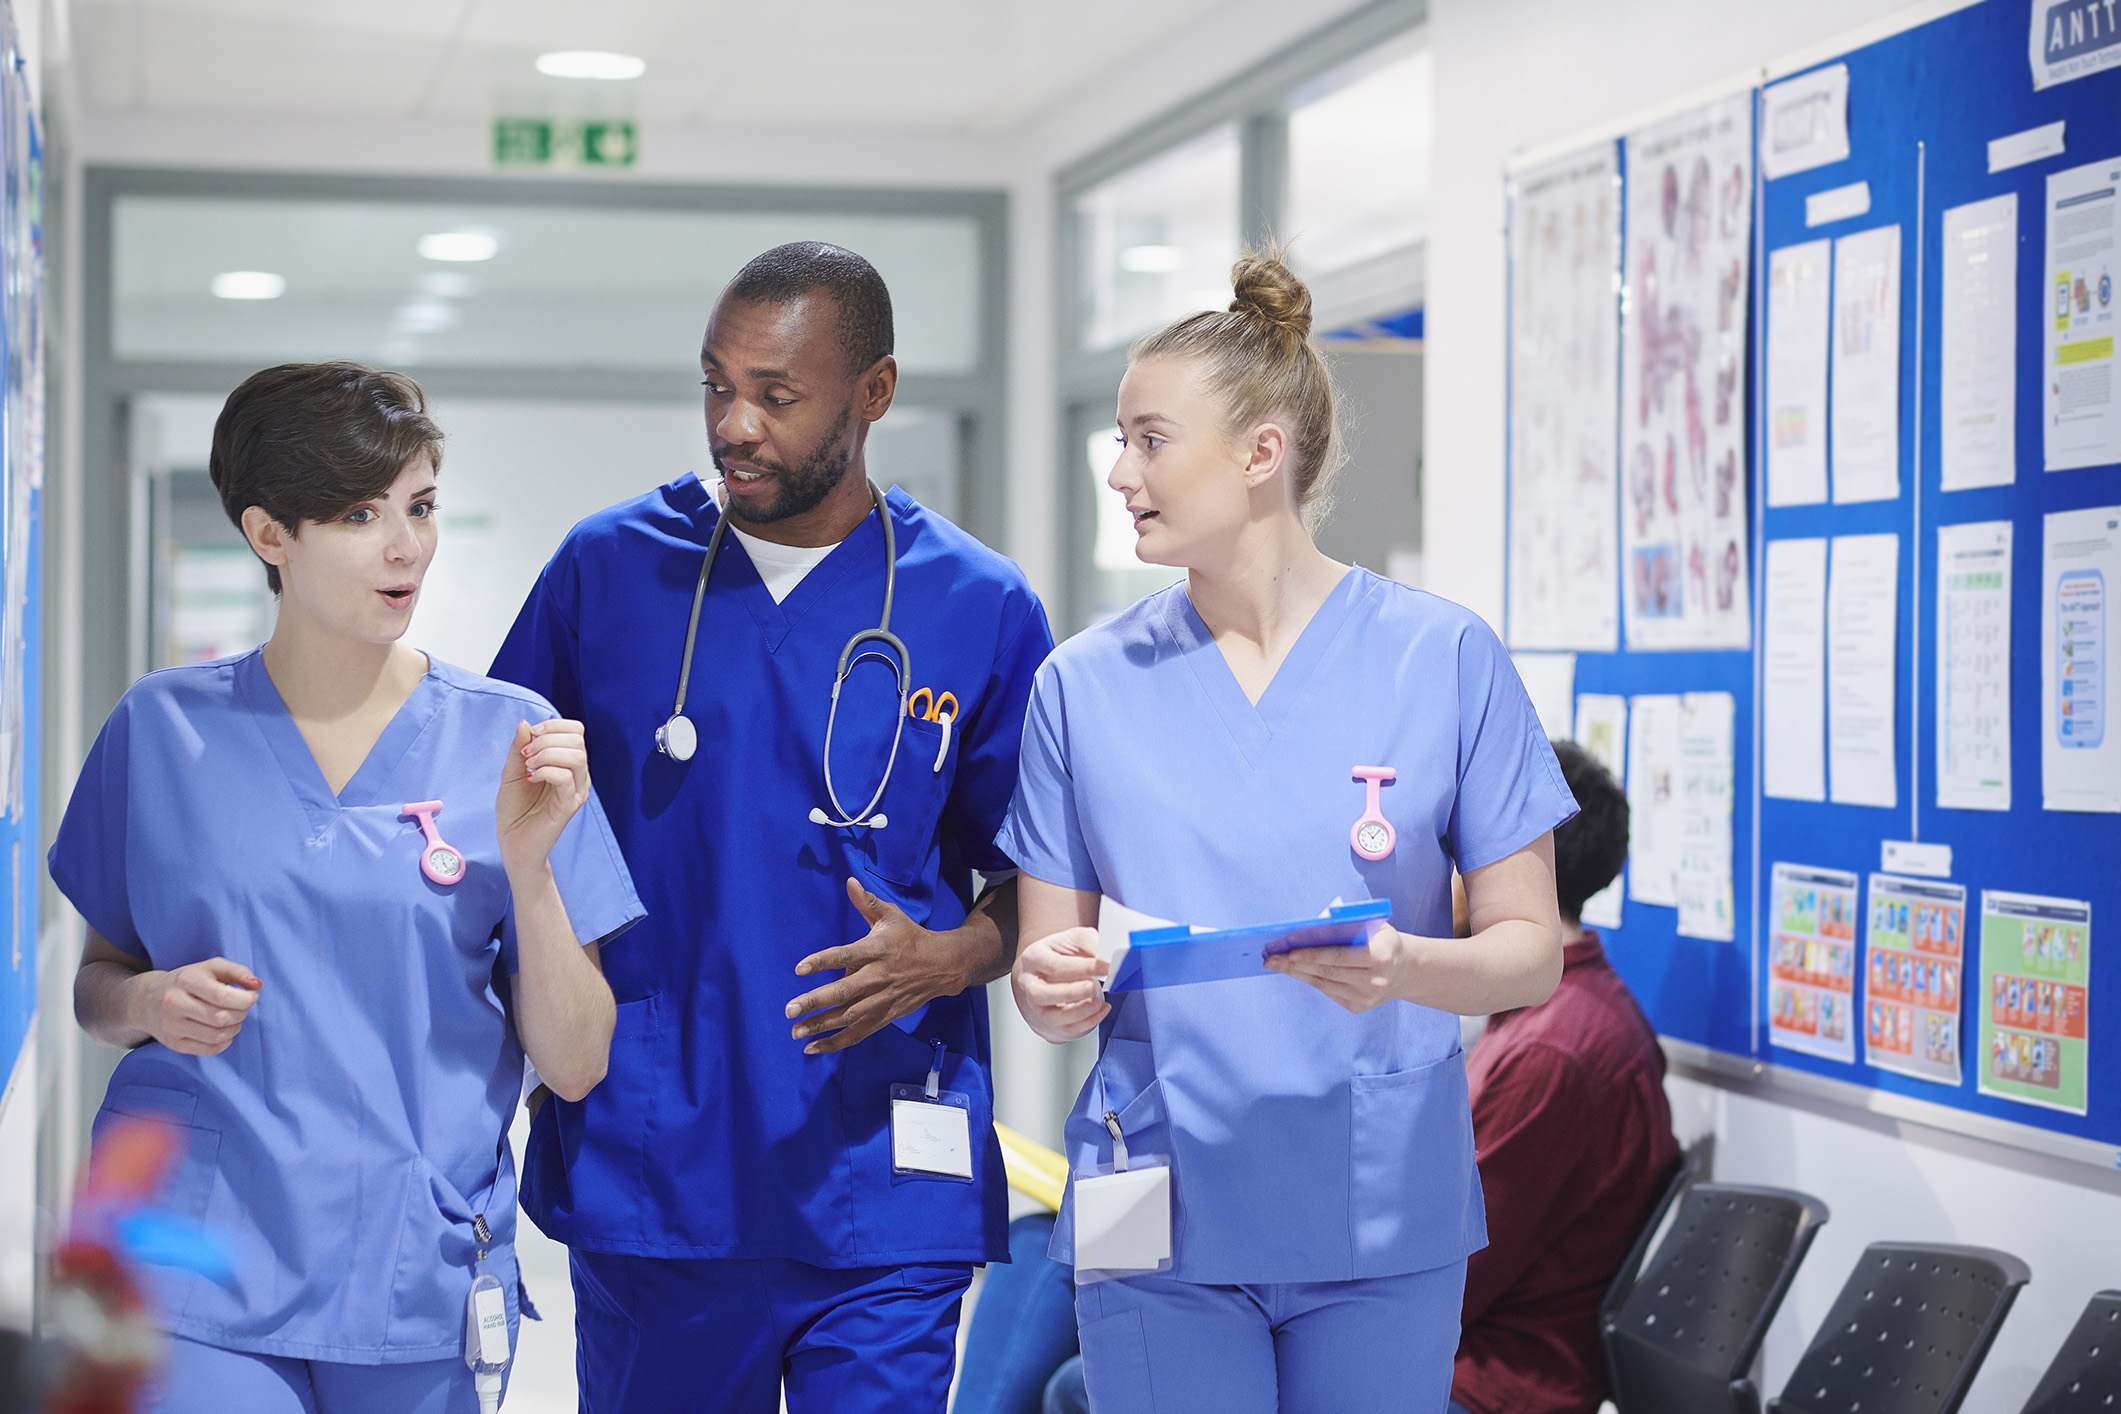 Medical consultant and two nurses walk along a hospital corridor